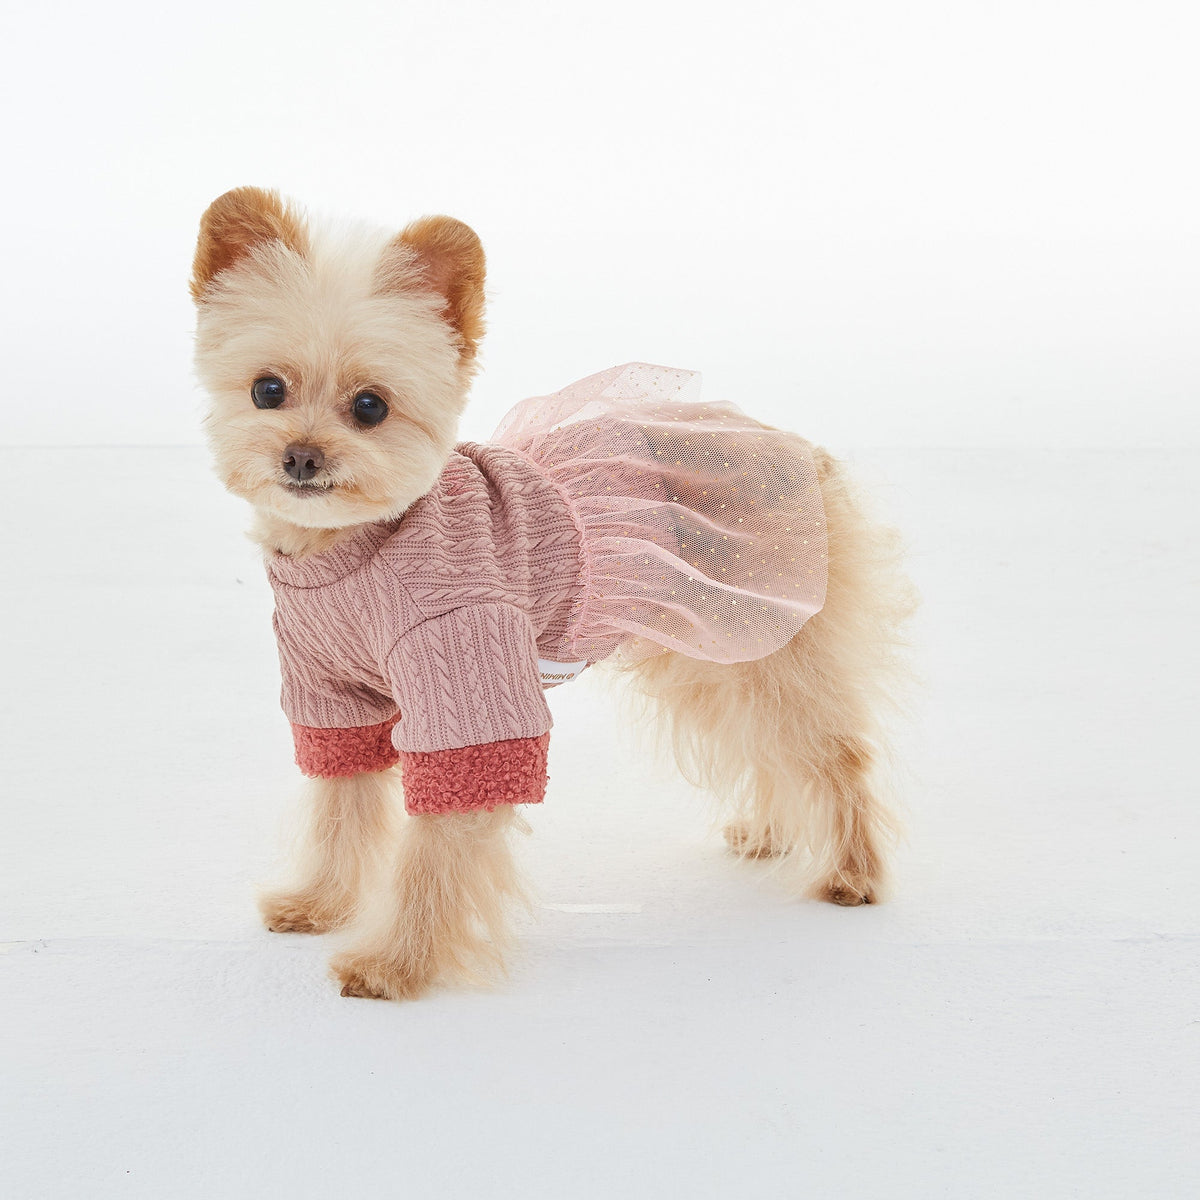 Shine Bright Sweater Dress - Pink